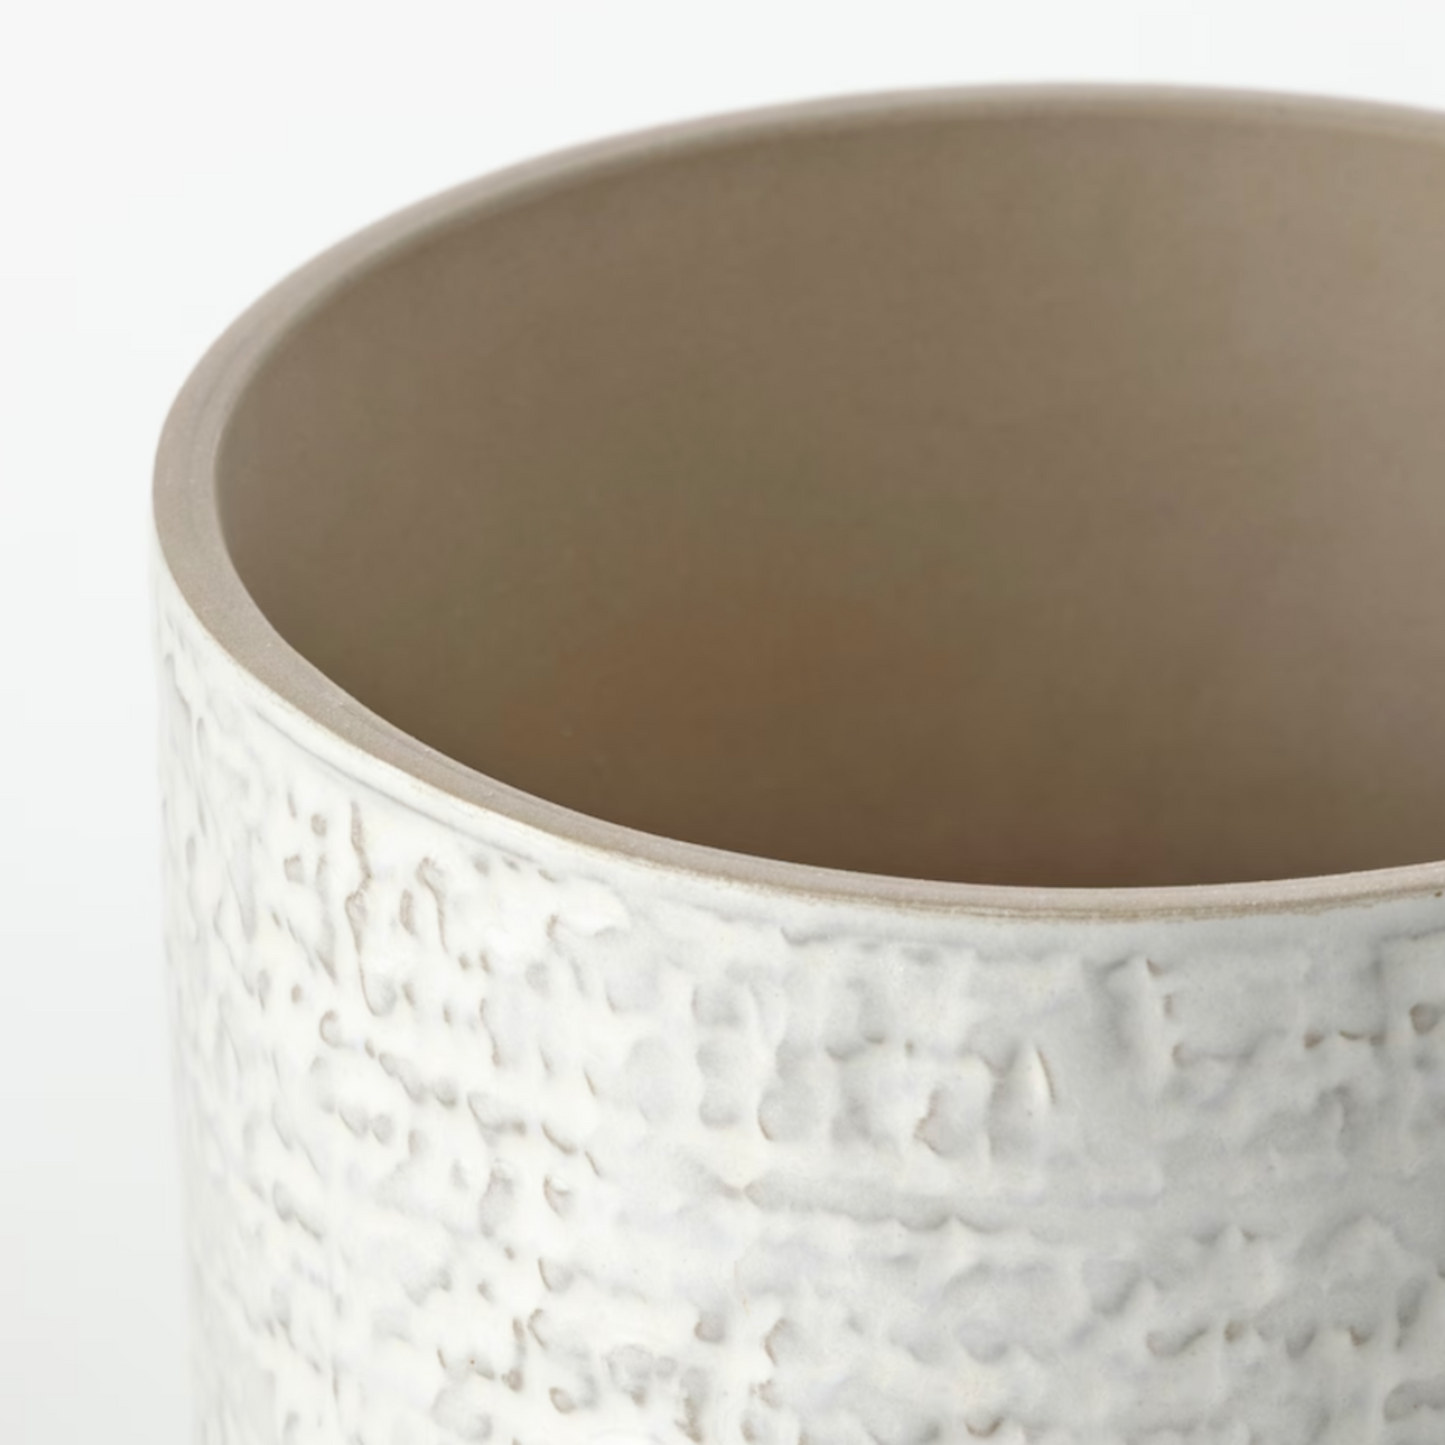 Ikea Chiafron Plant Pot, 12cm, White (8897169293599)